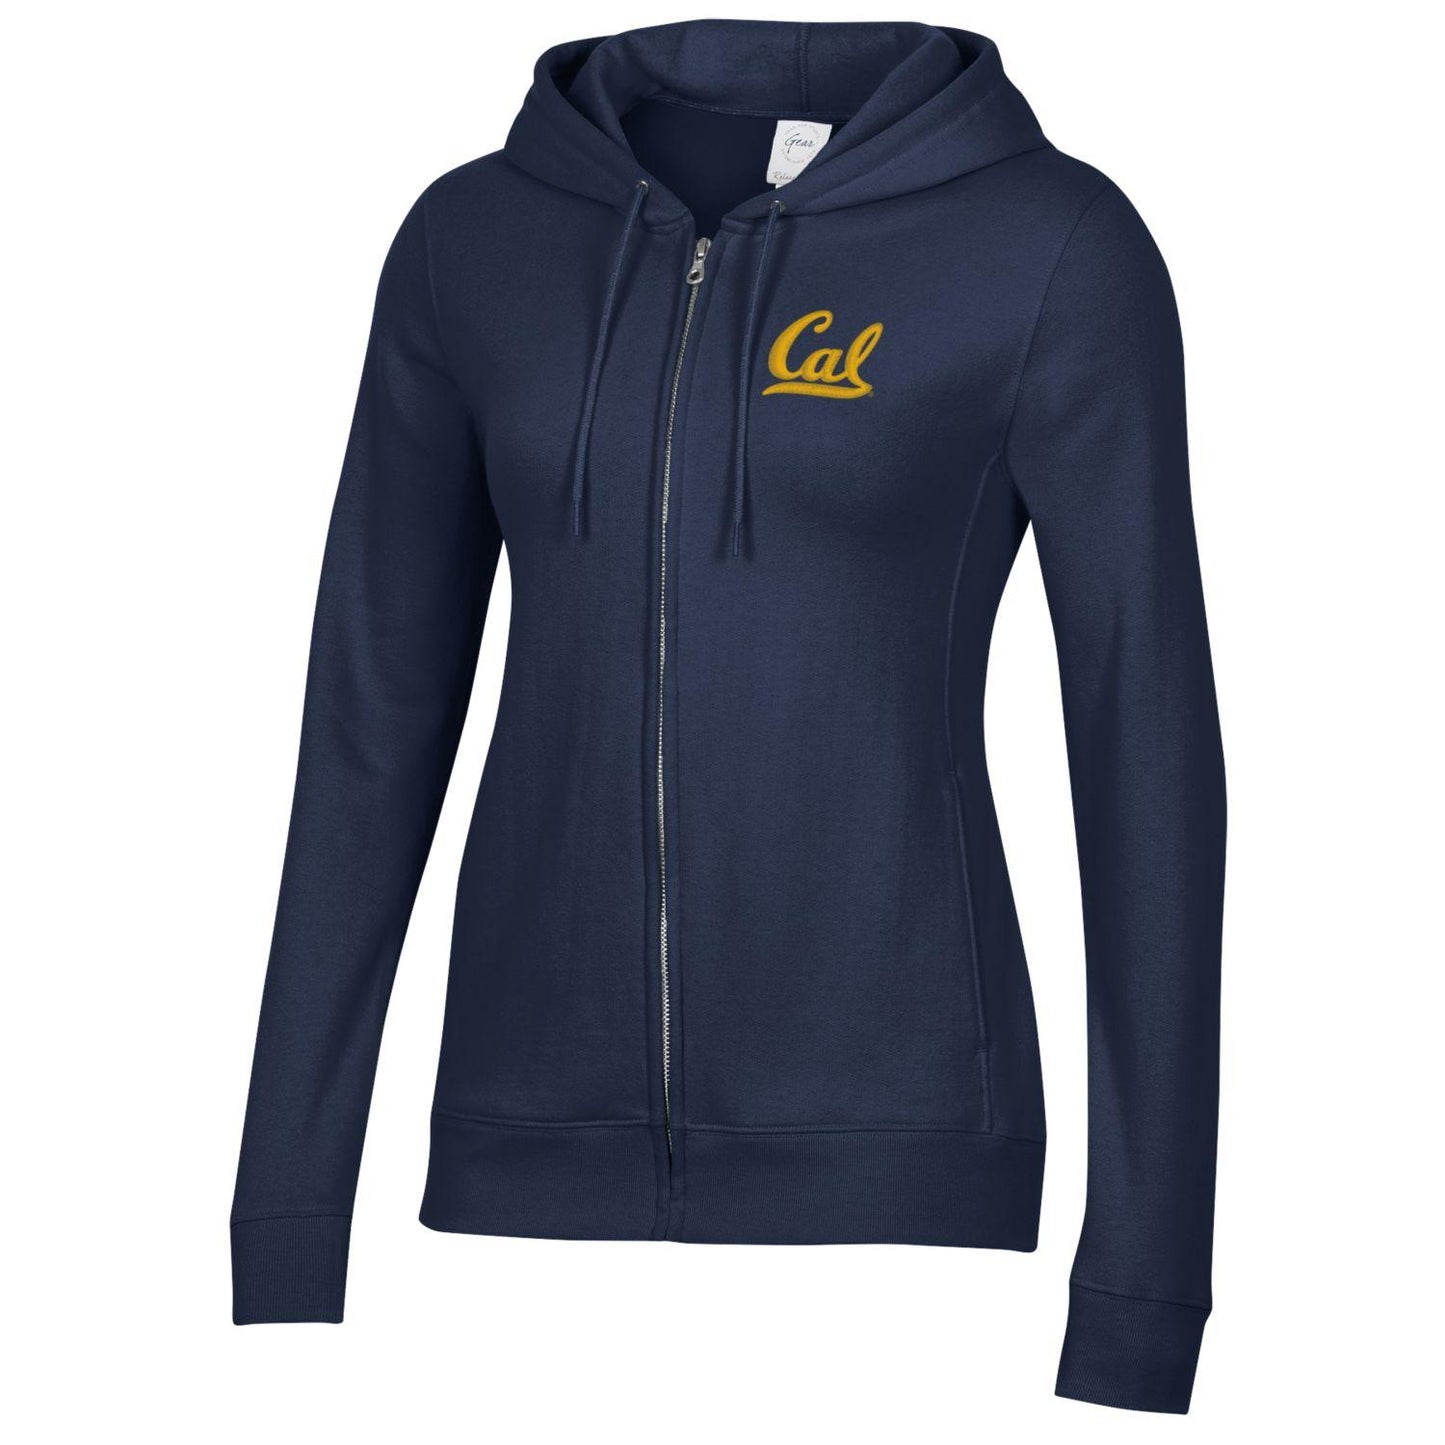 U.C. Berkeley Cal embroidered Gear for Sports women's relax zip hoodie-Navy-Shop College Wear